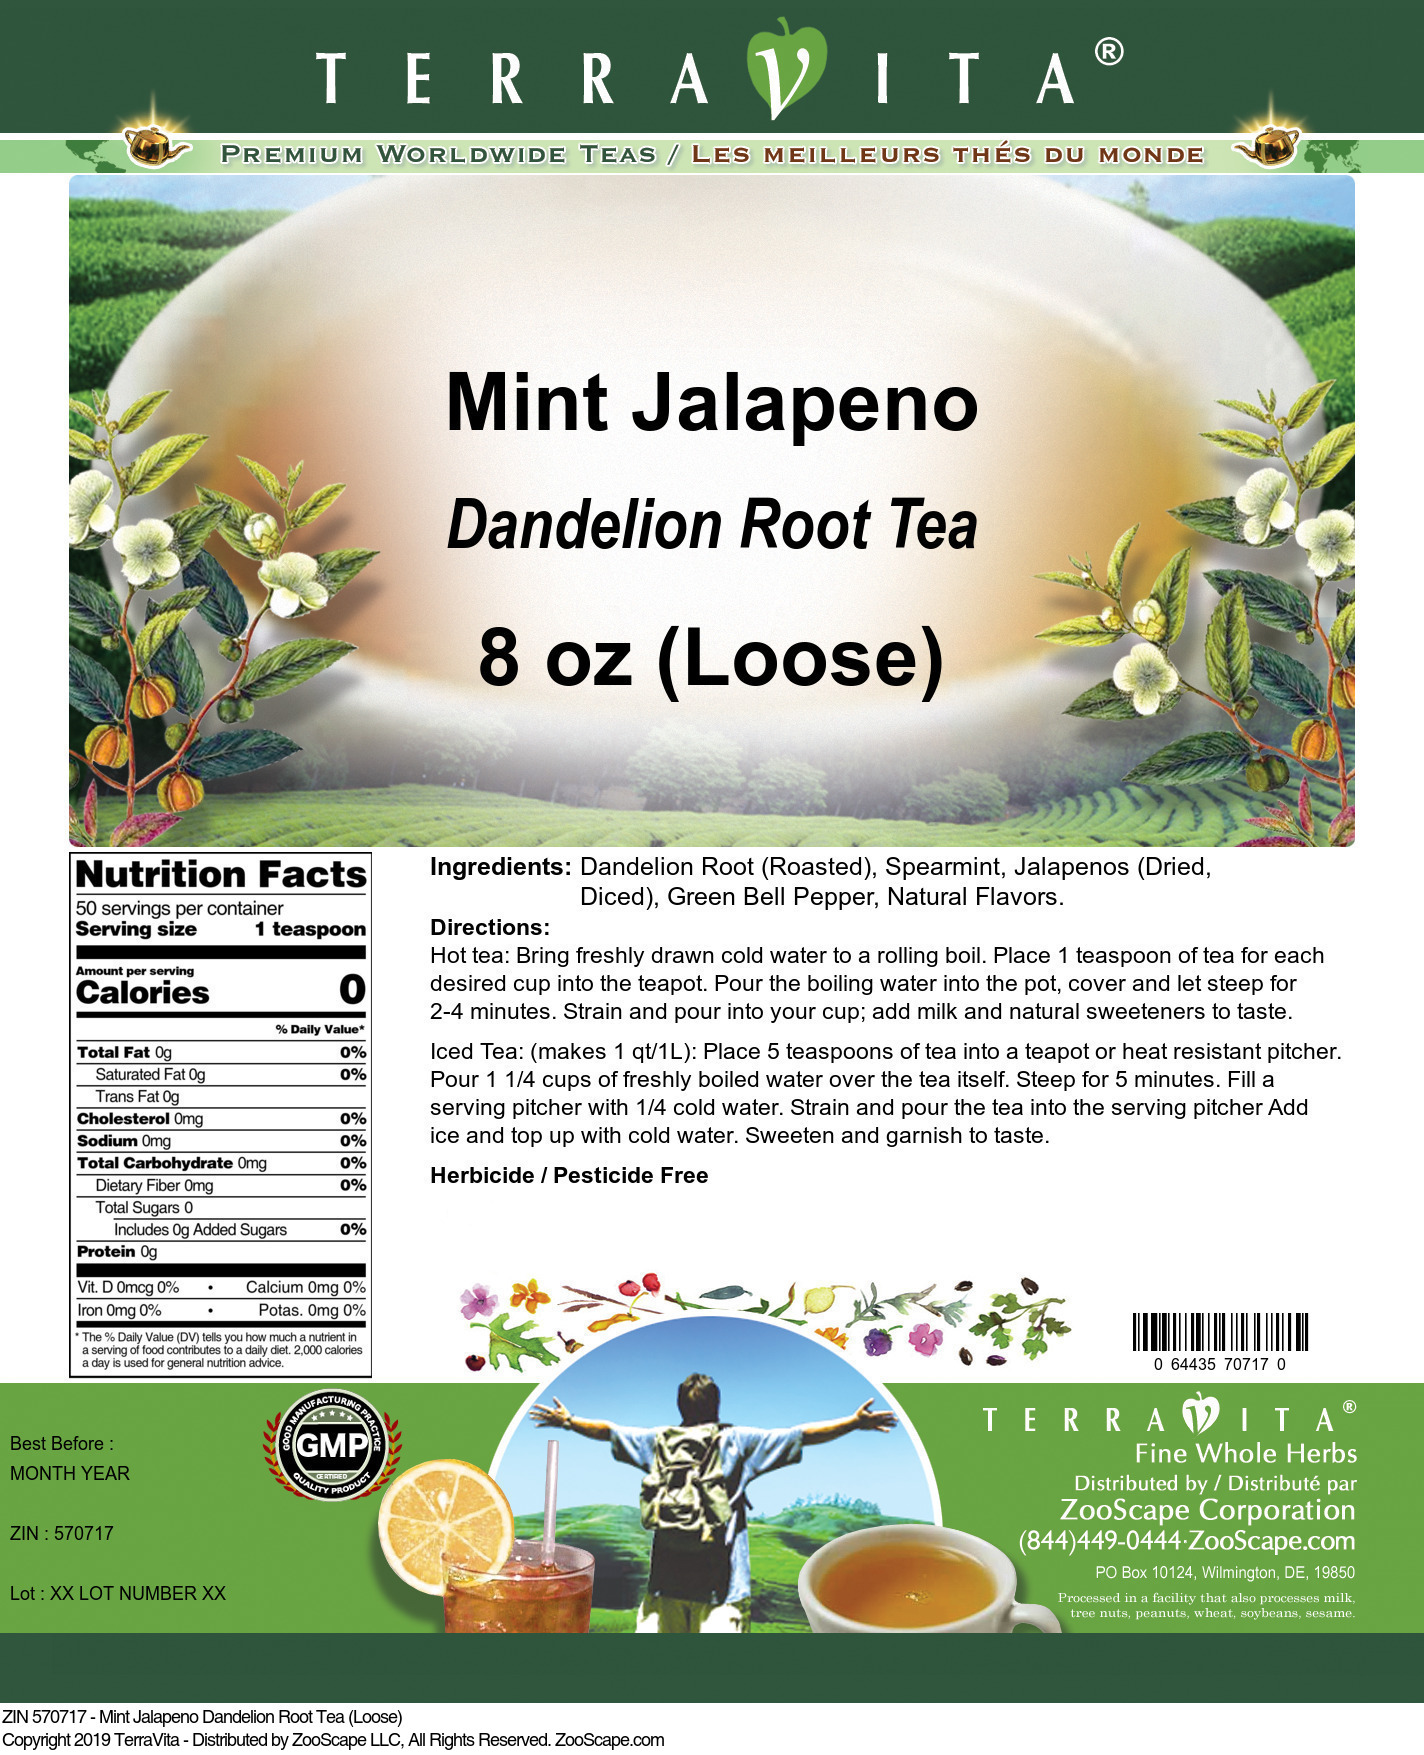 Mint Jalapeno Dandelion Root Tea (Loose) - Label